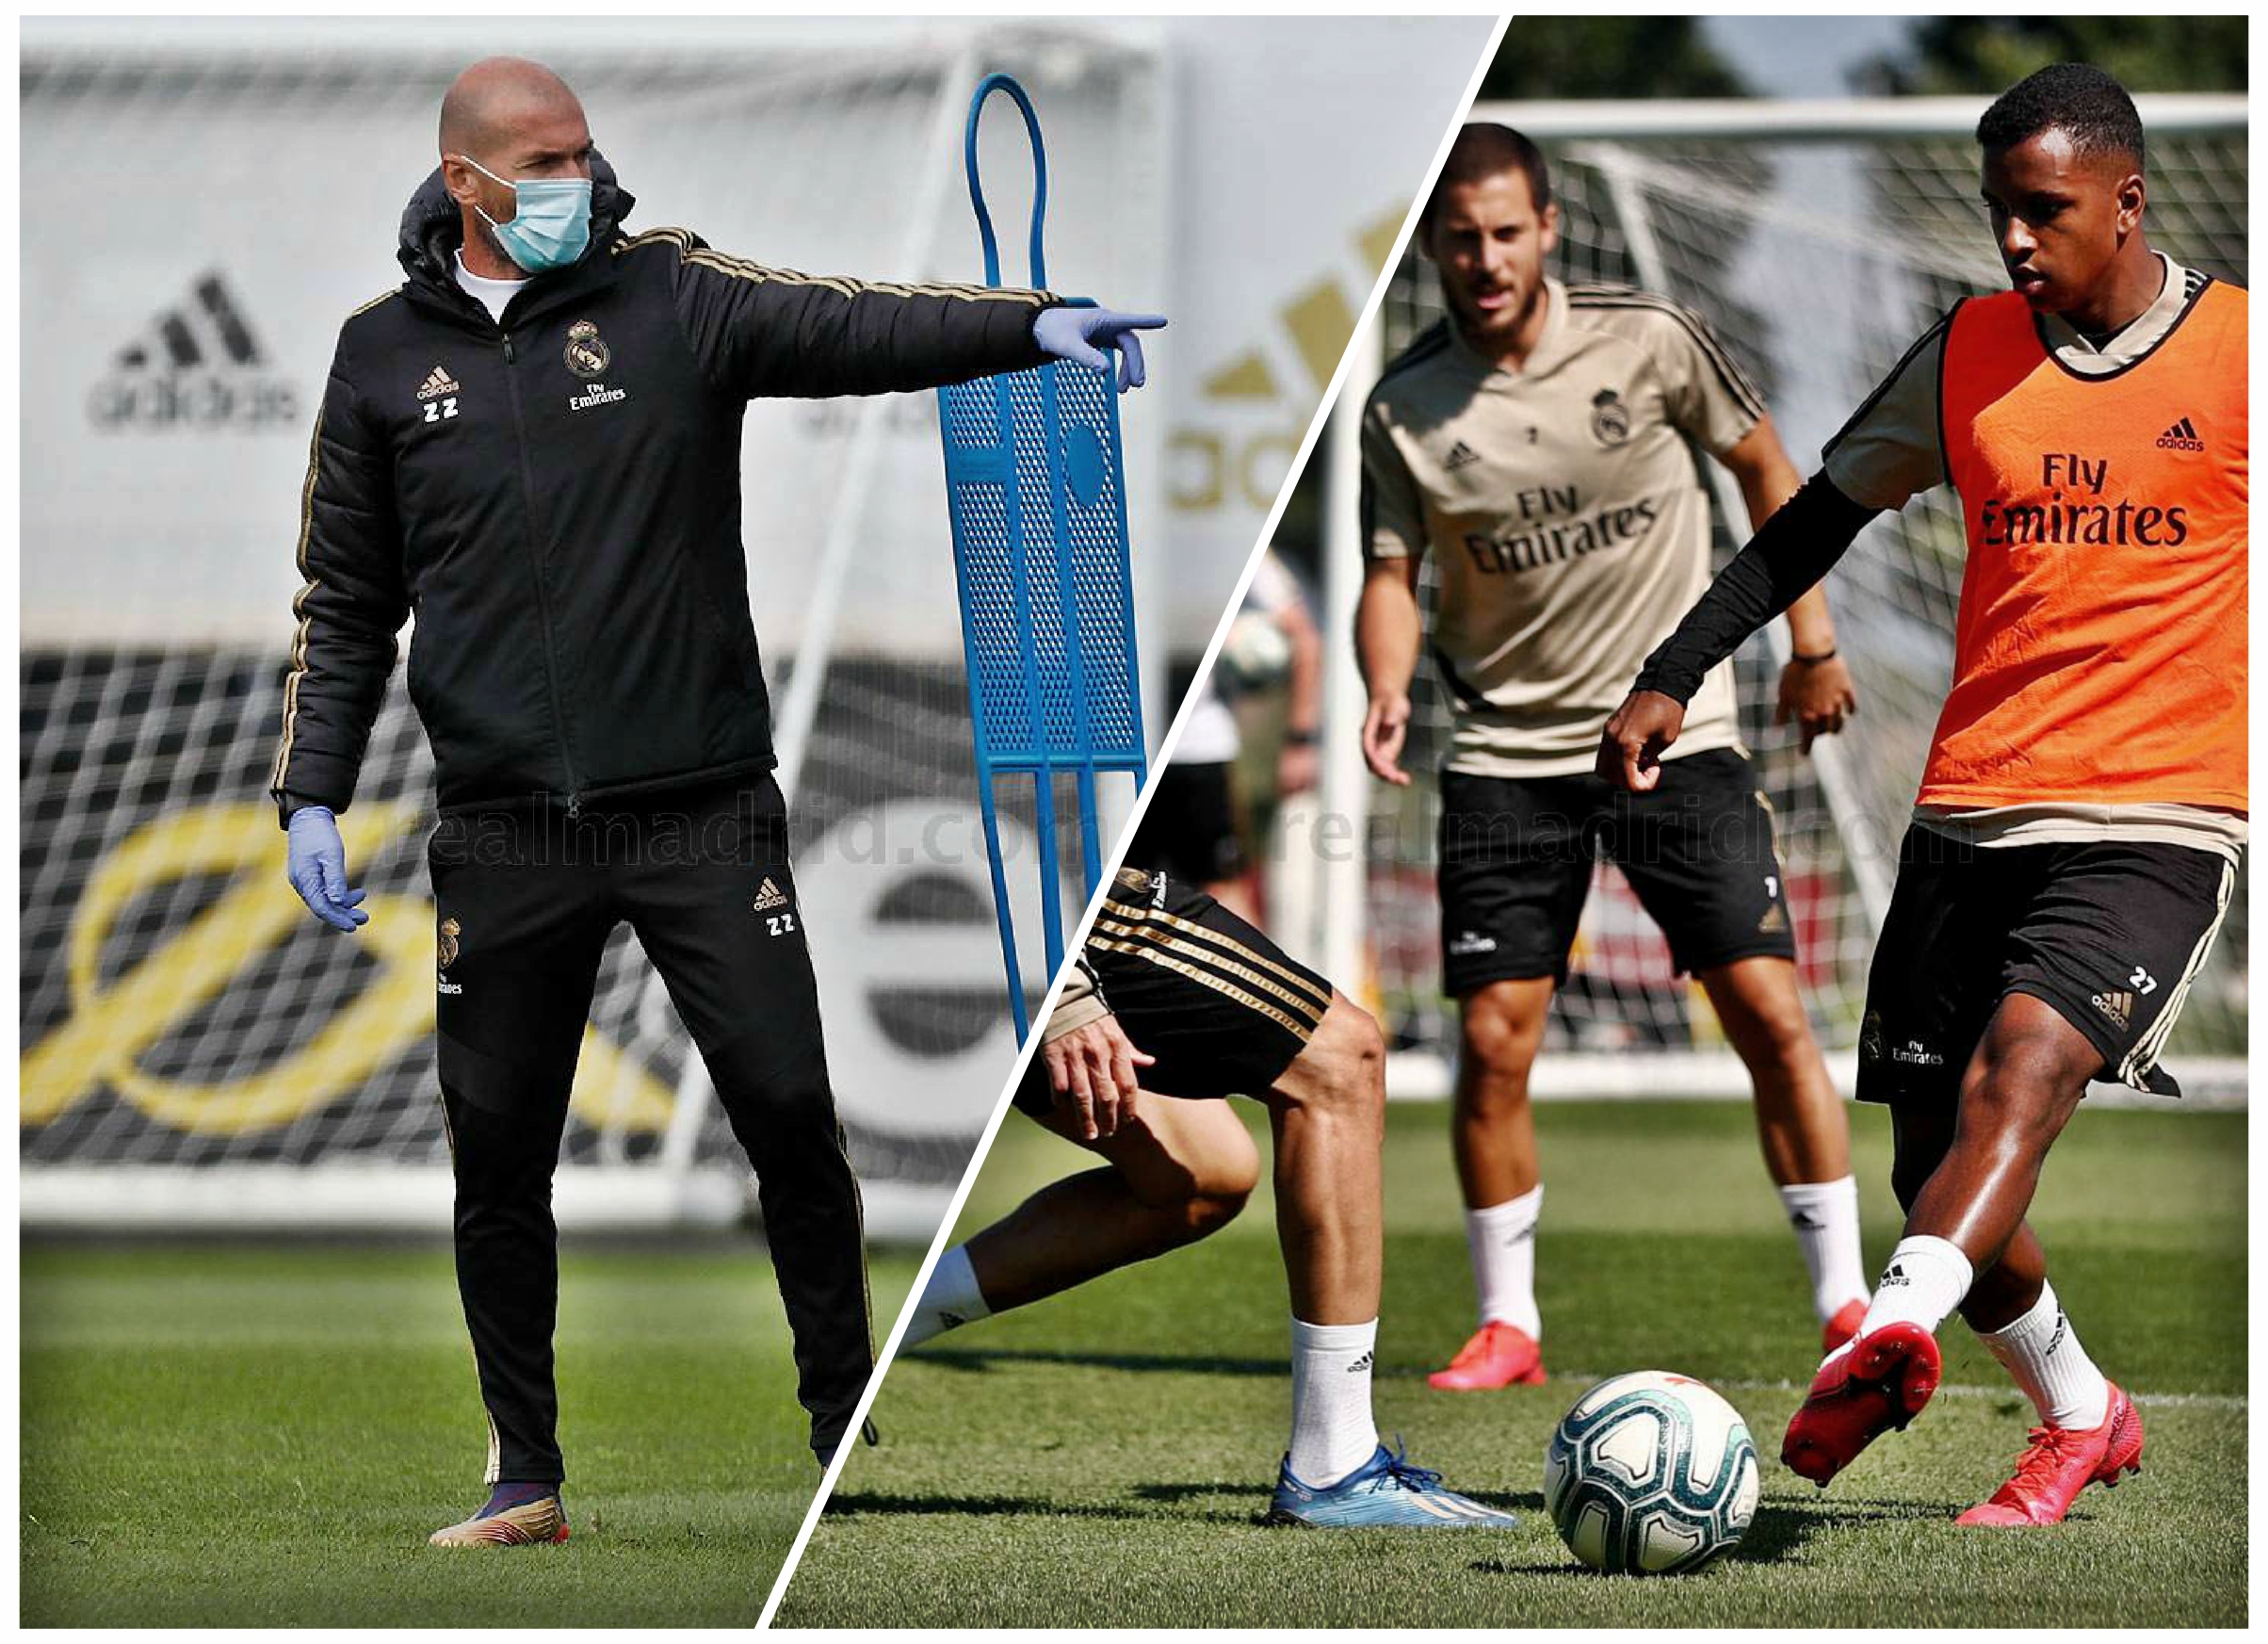 Zidane y Real Madrid